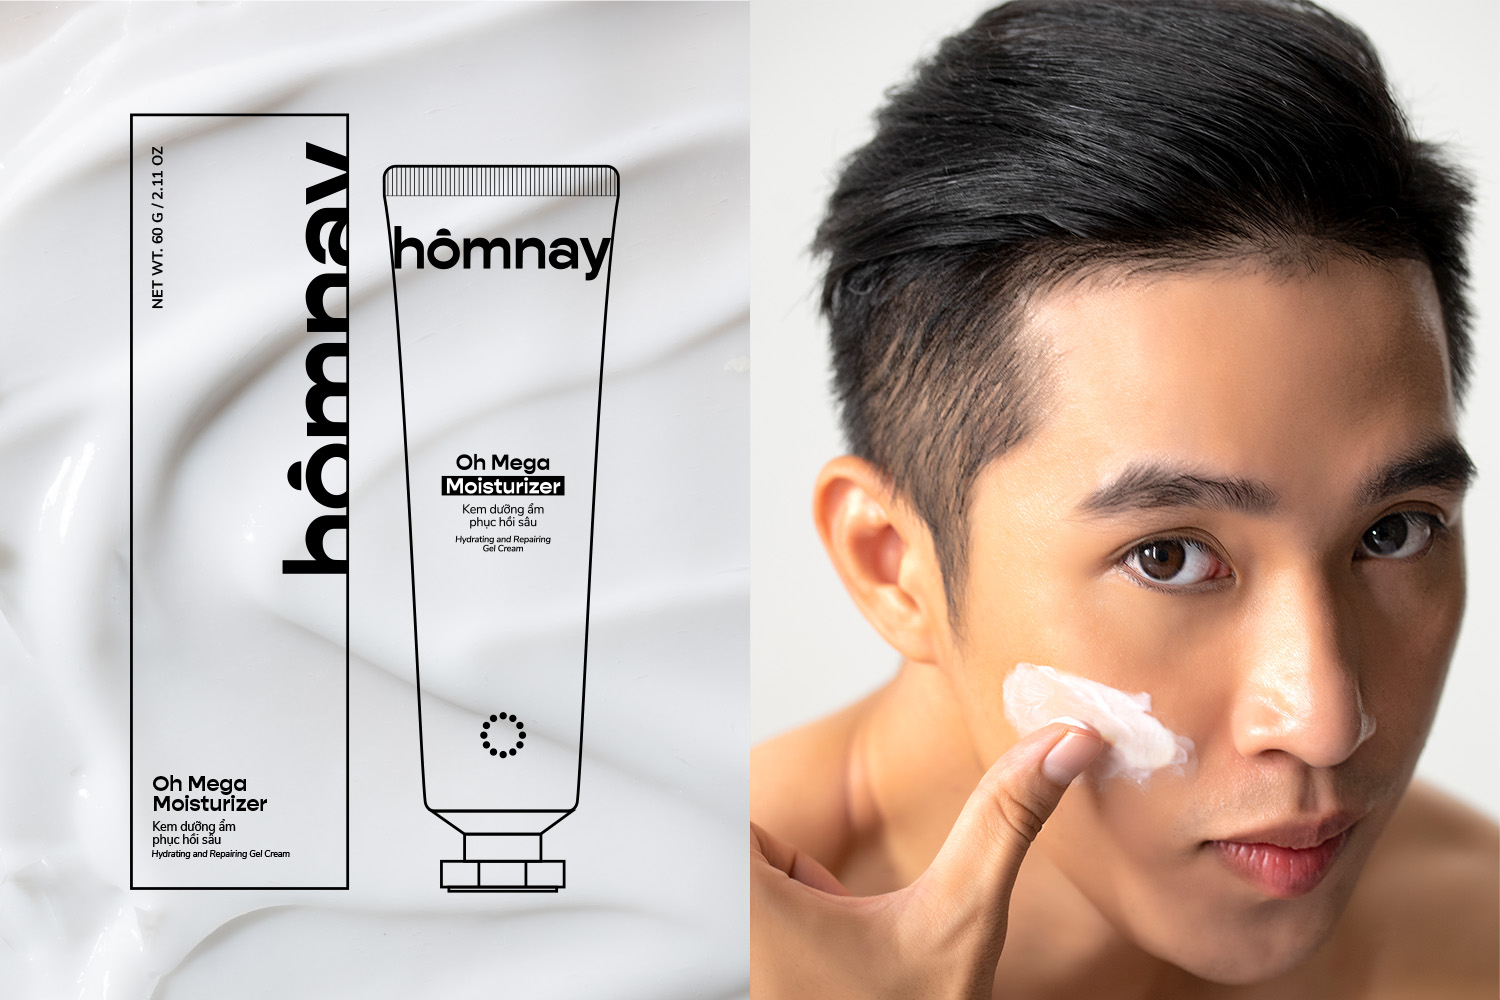 homnay texture moisturizer male model